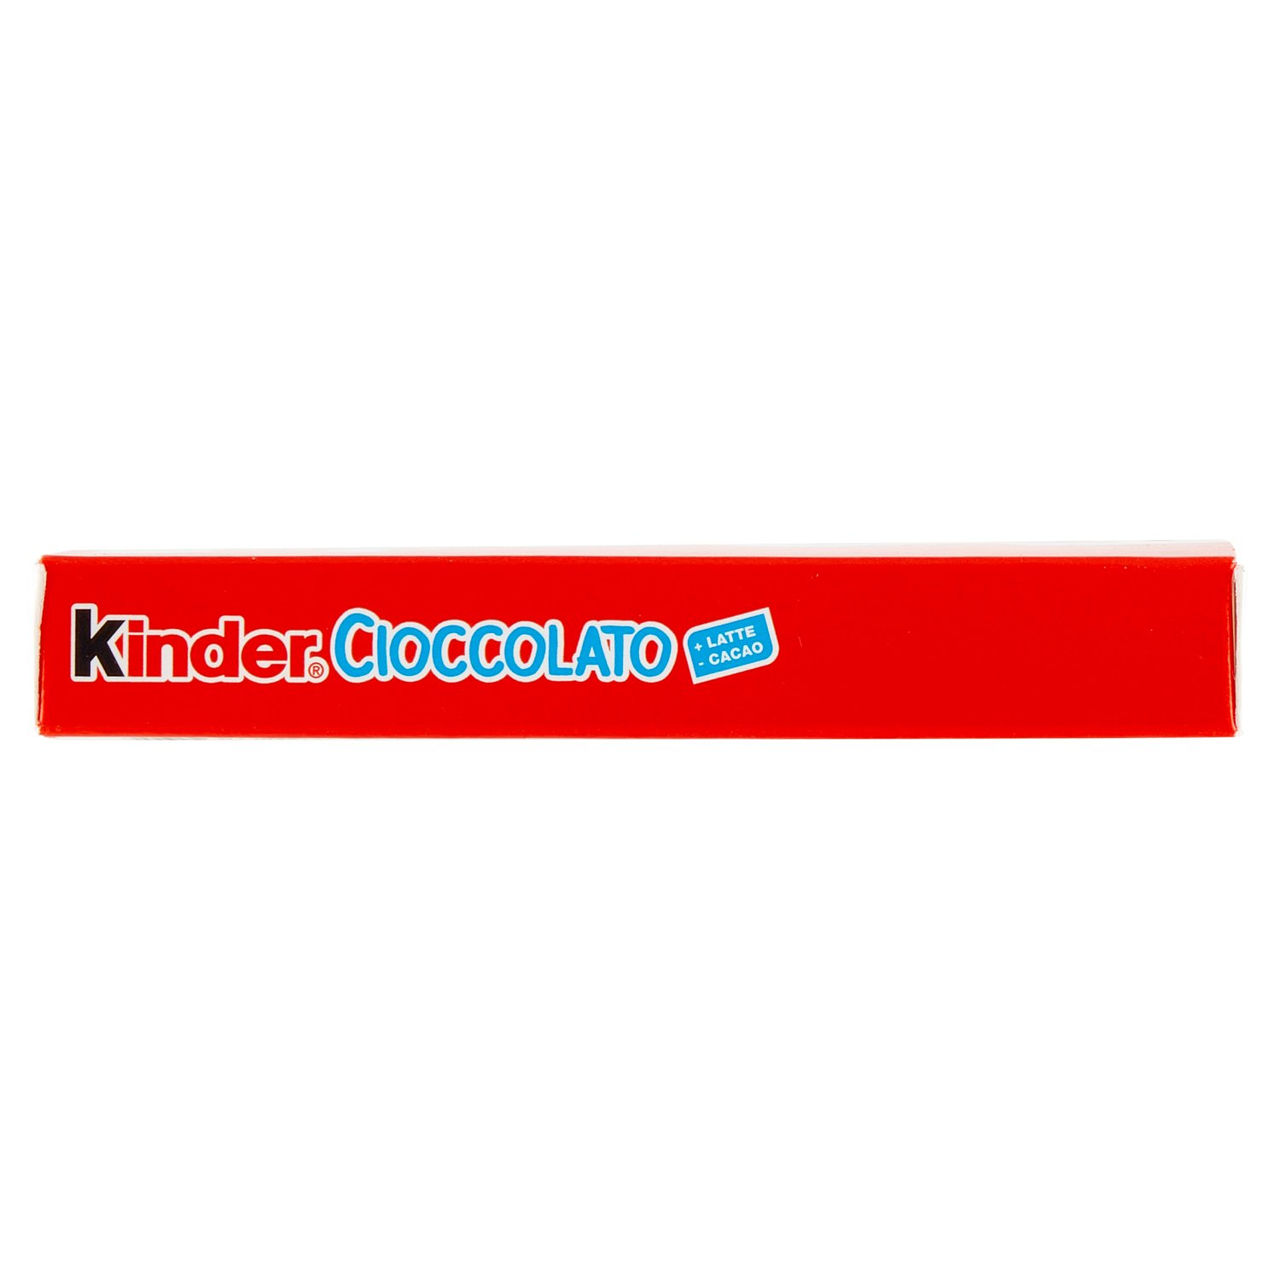 Kinder Cioccolato 4 x 12,5 g in vendita online